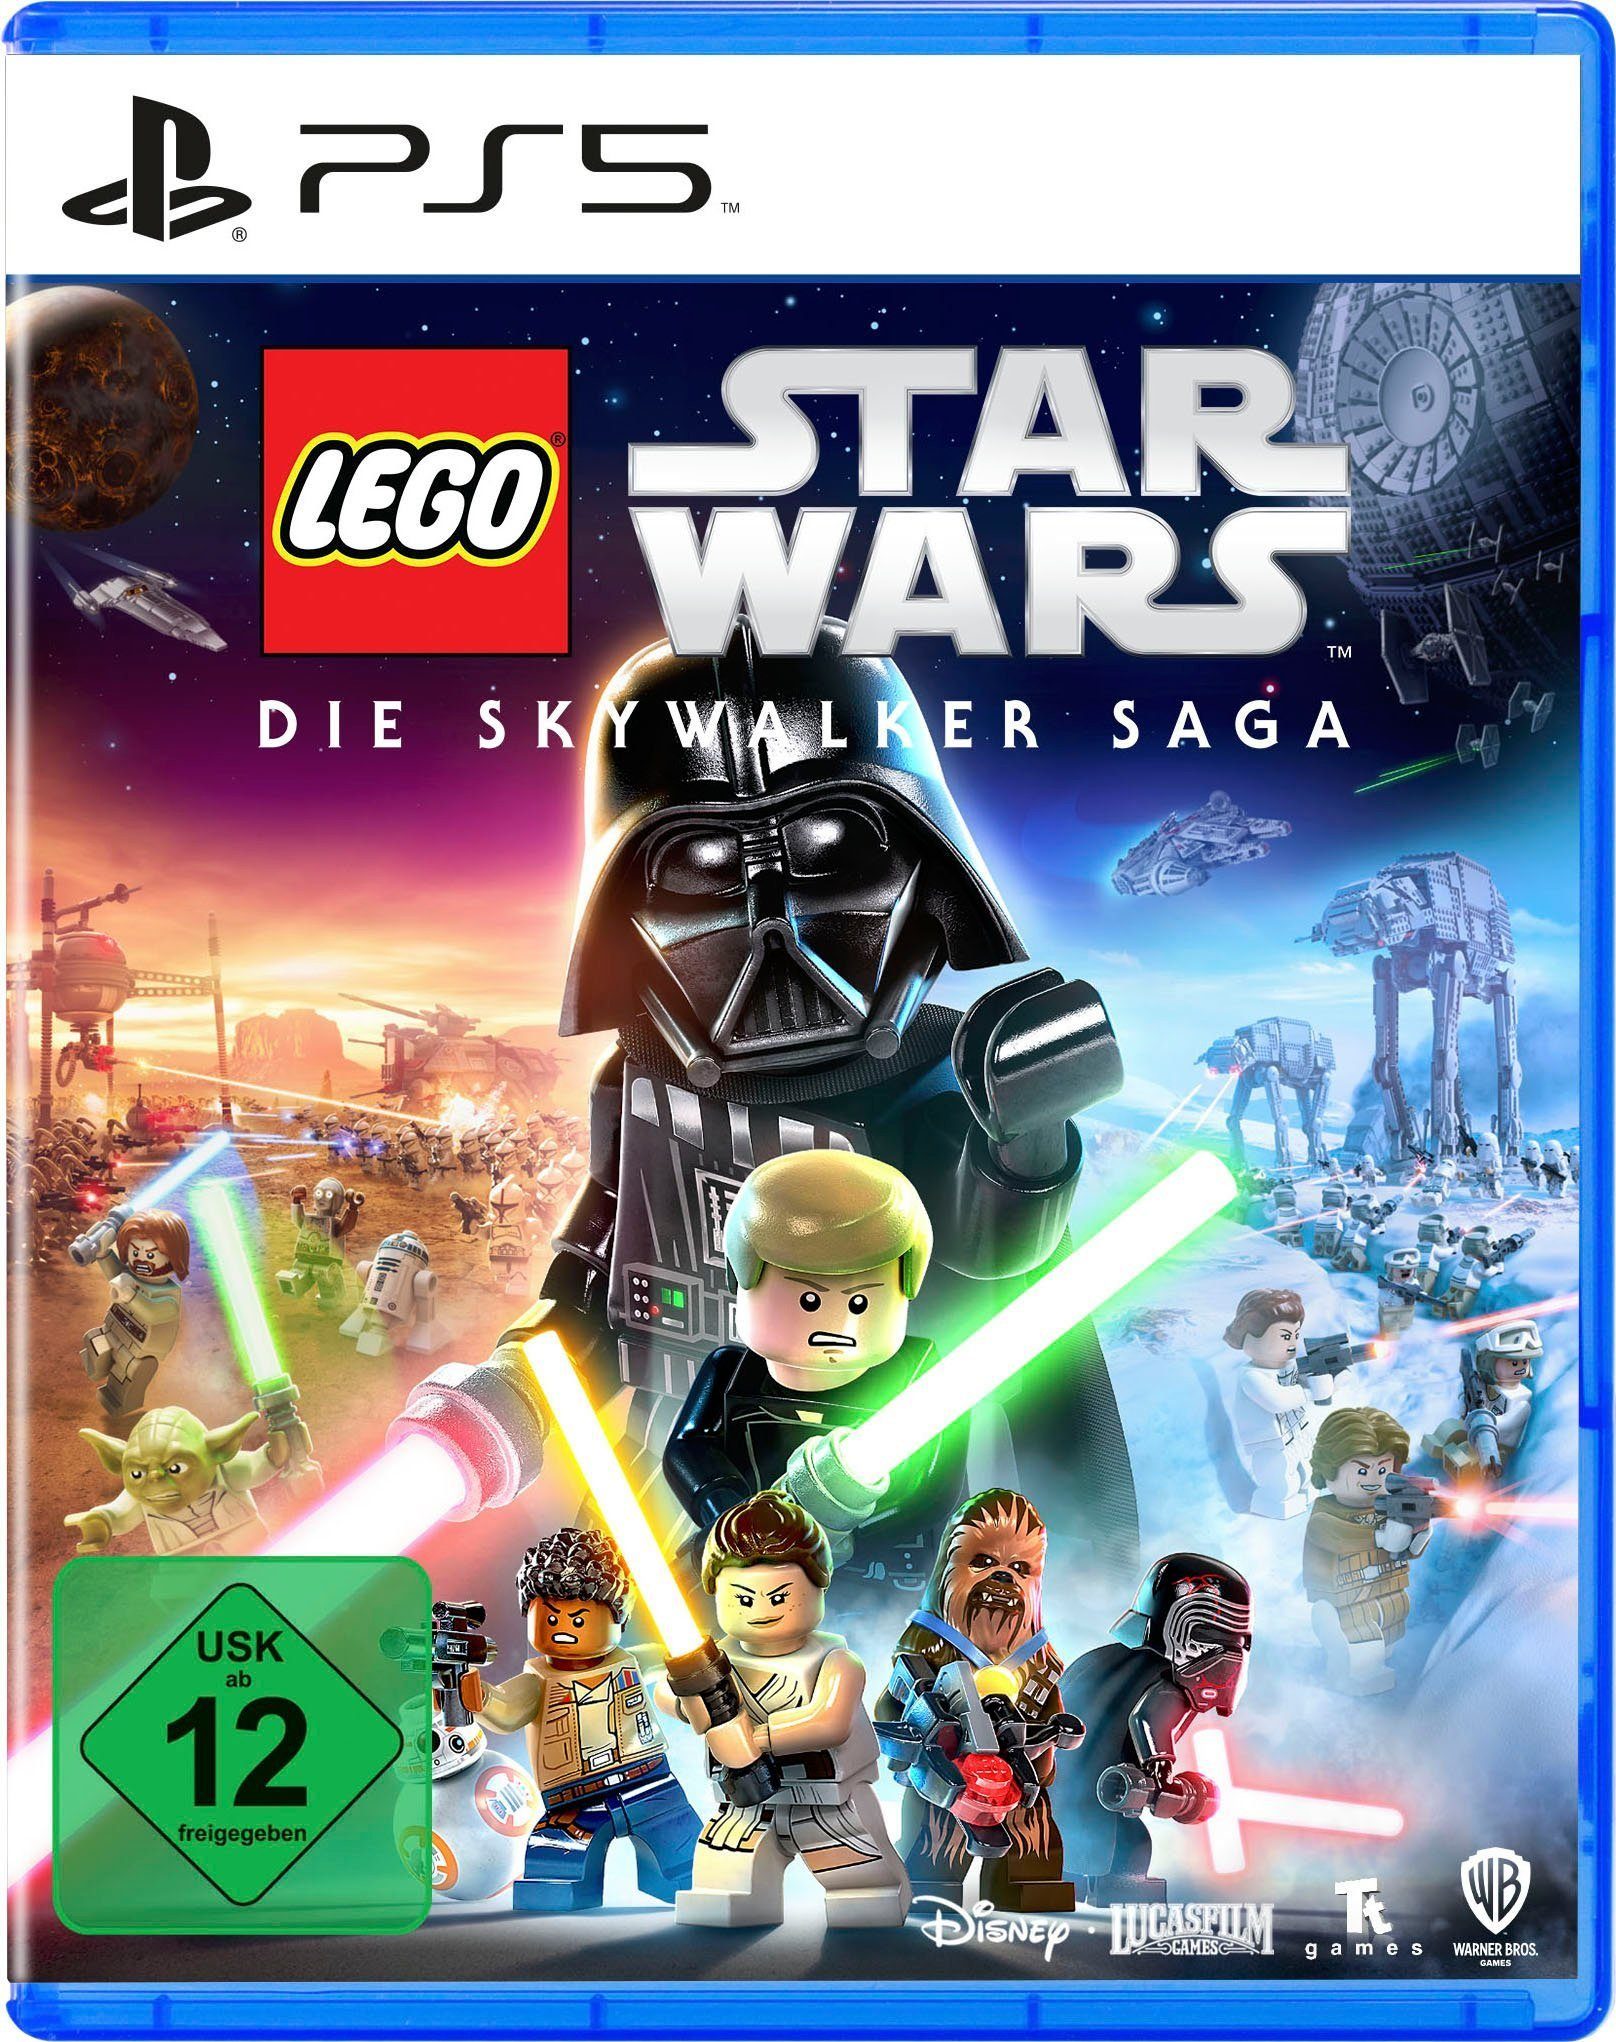 PS5 Saga Wars Star Lego Disney Skywalker The